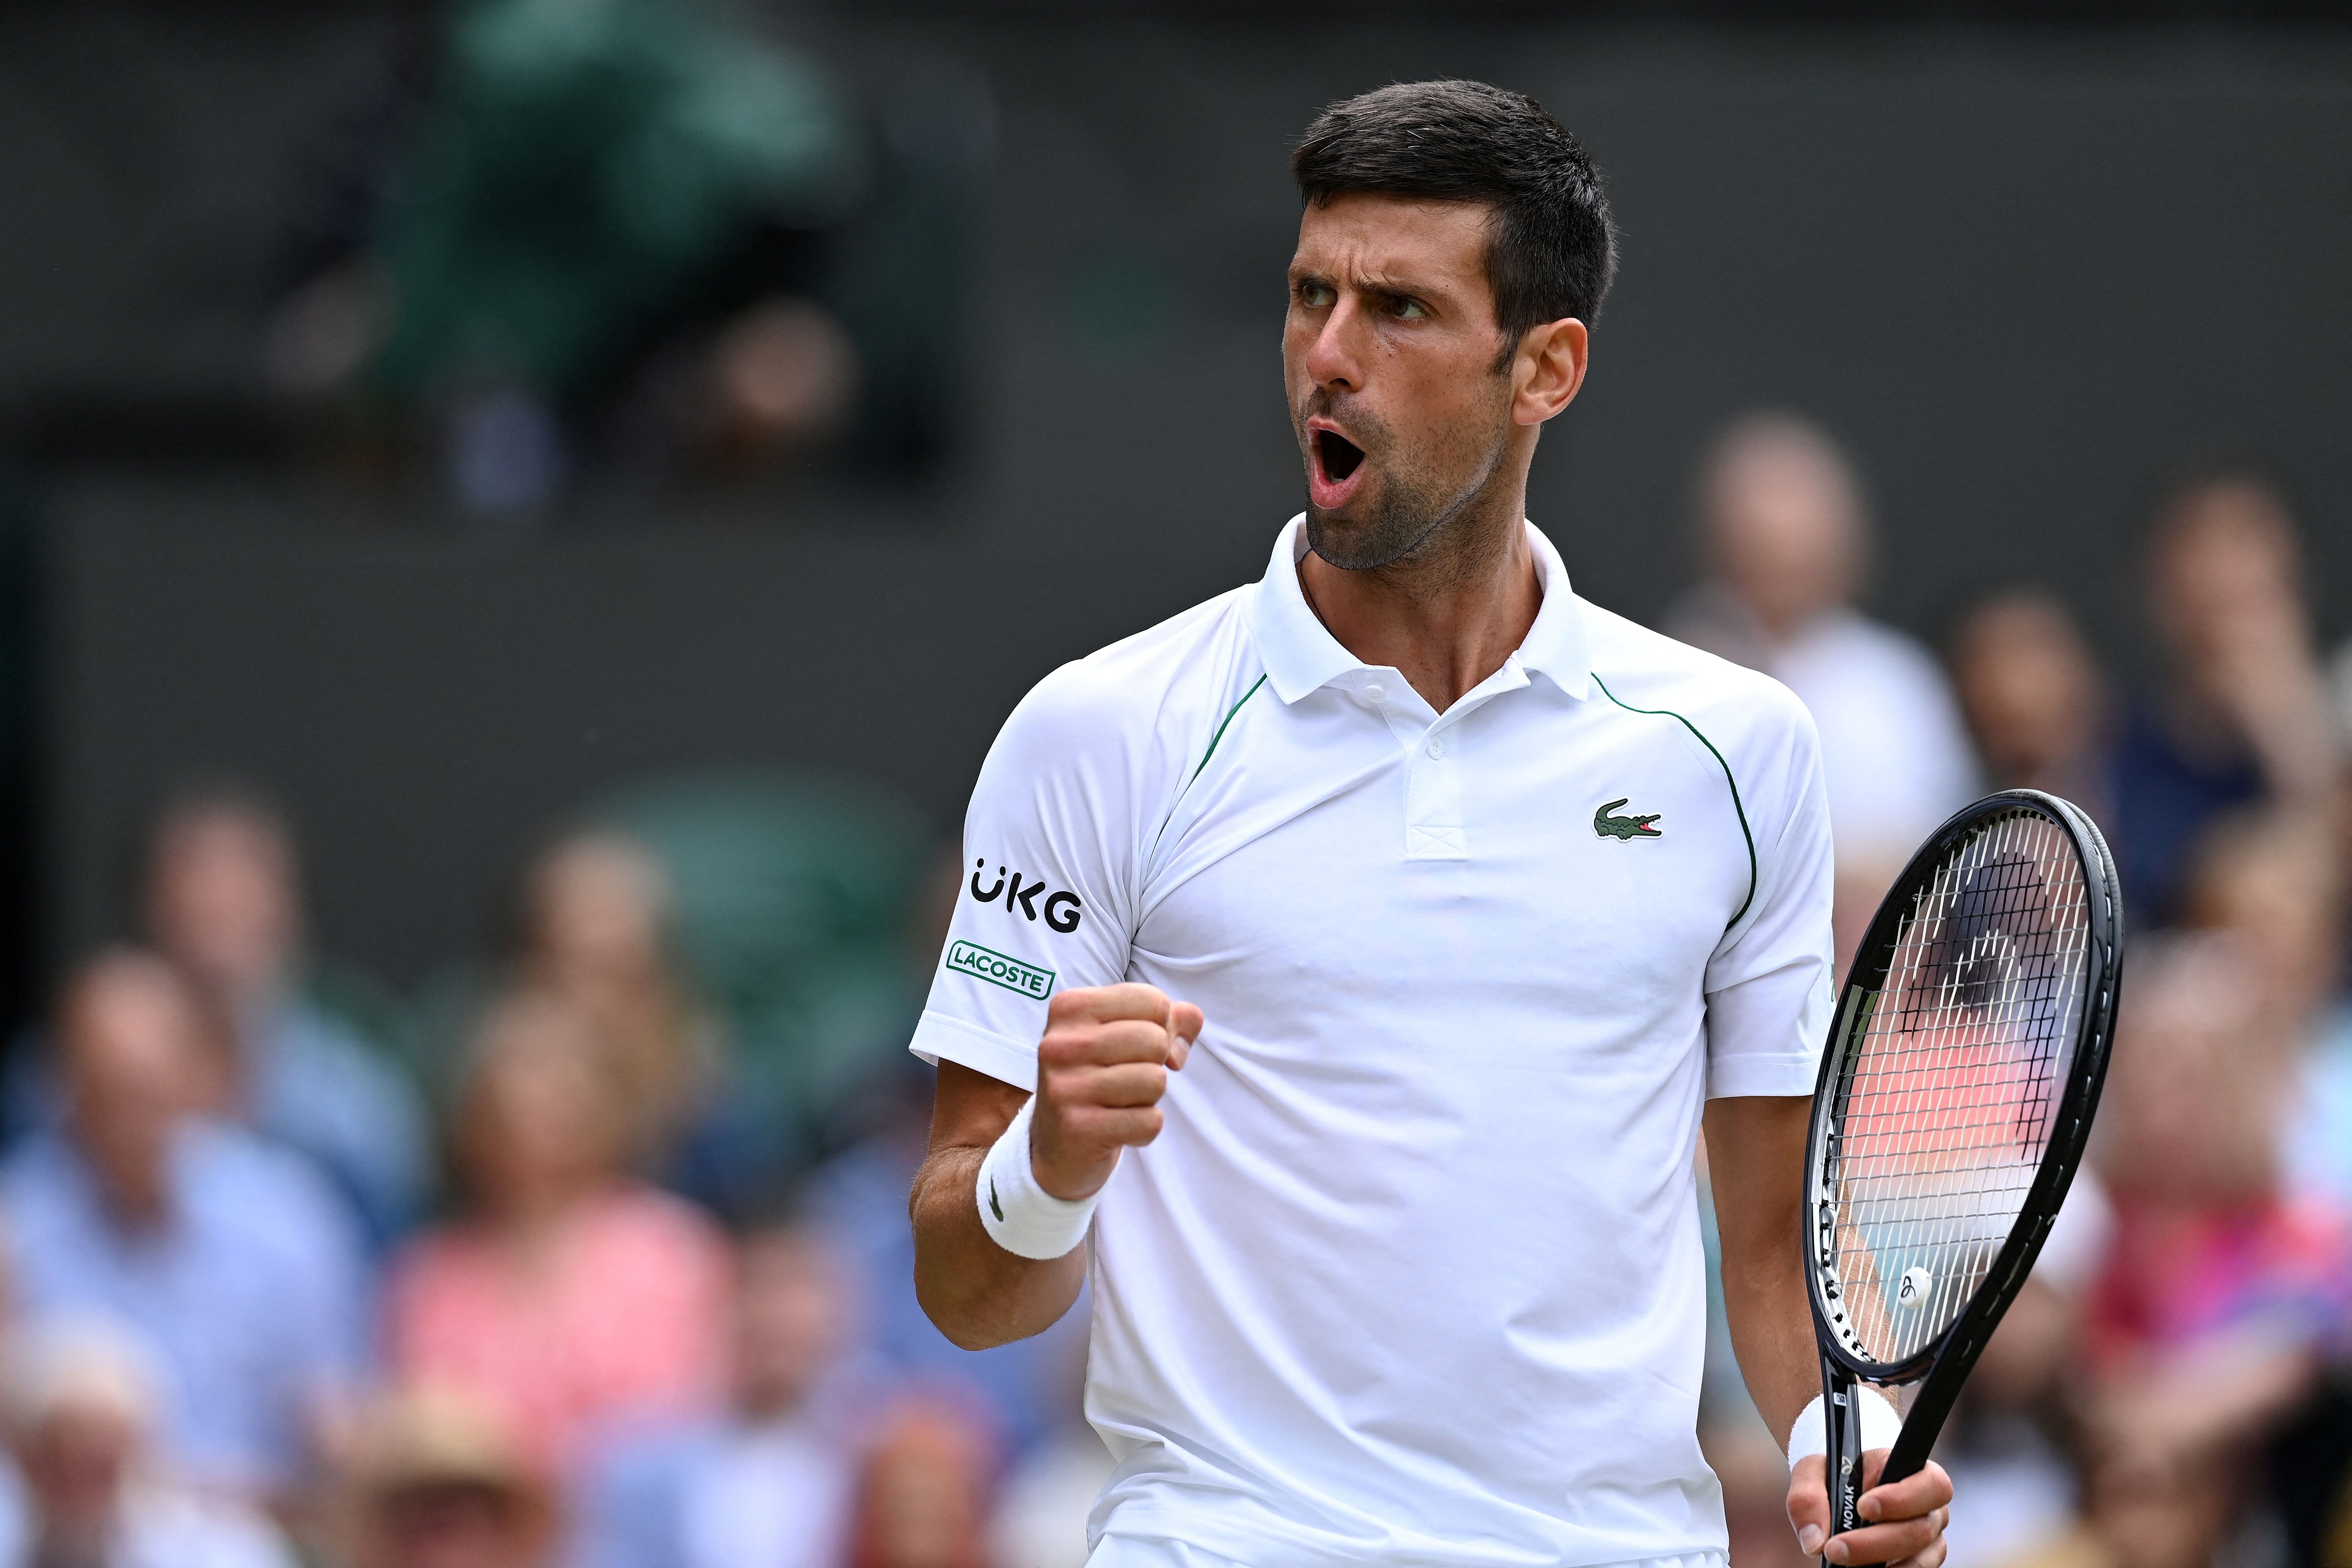 Two wins from a historic Wimbledon title, Novak Djokovic's 2021 has